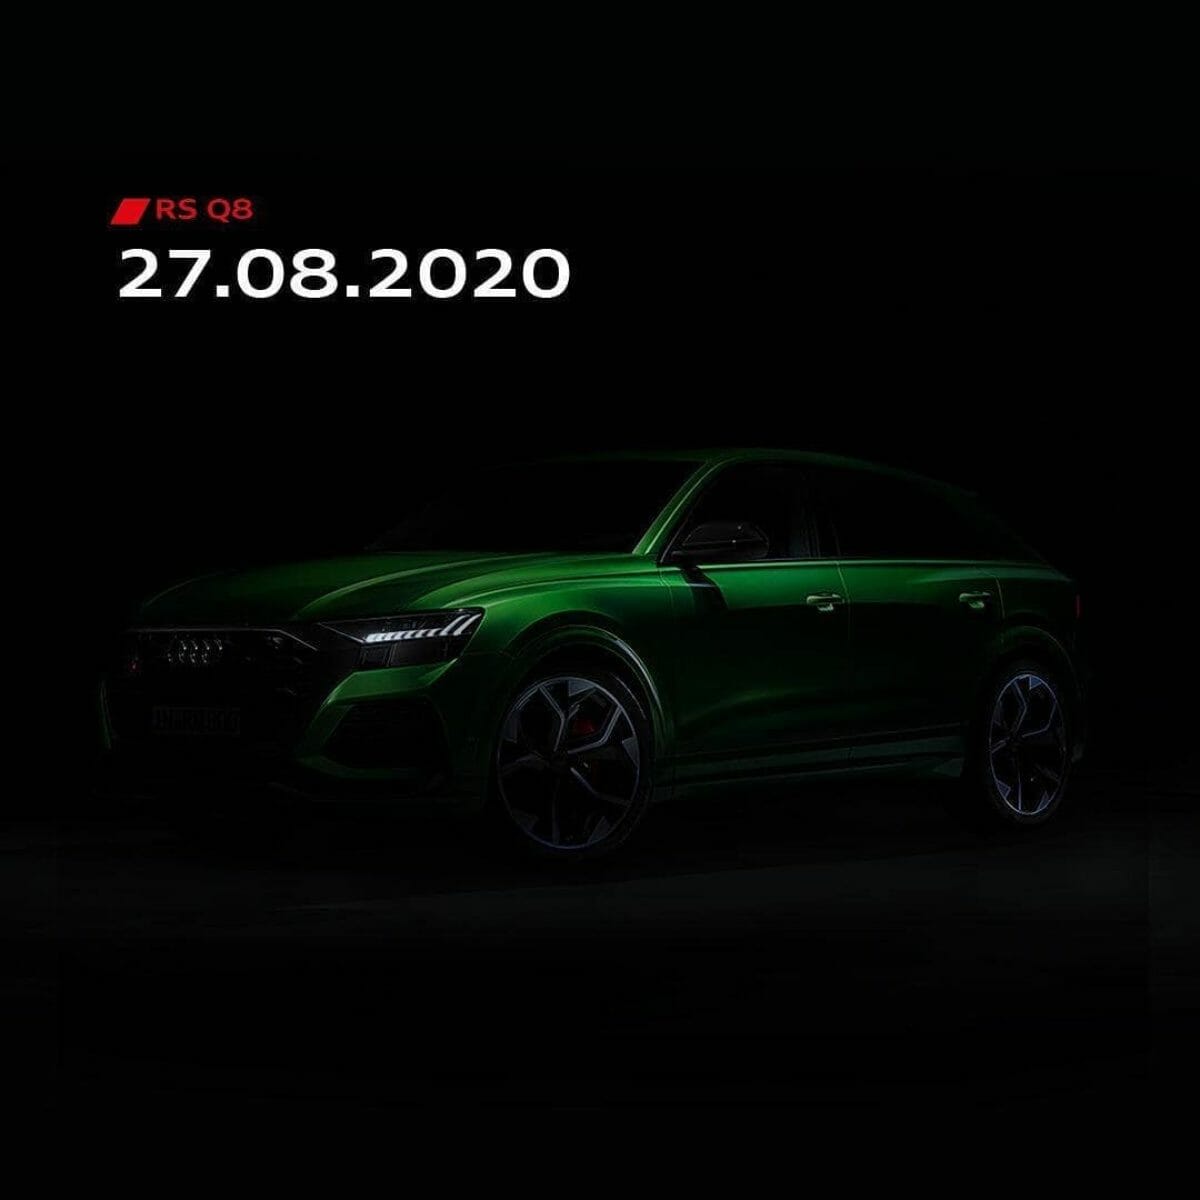 Audi RS Q8 launch date